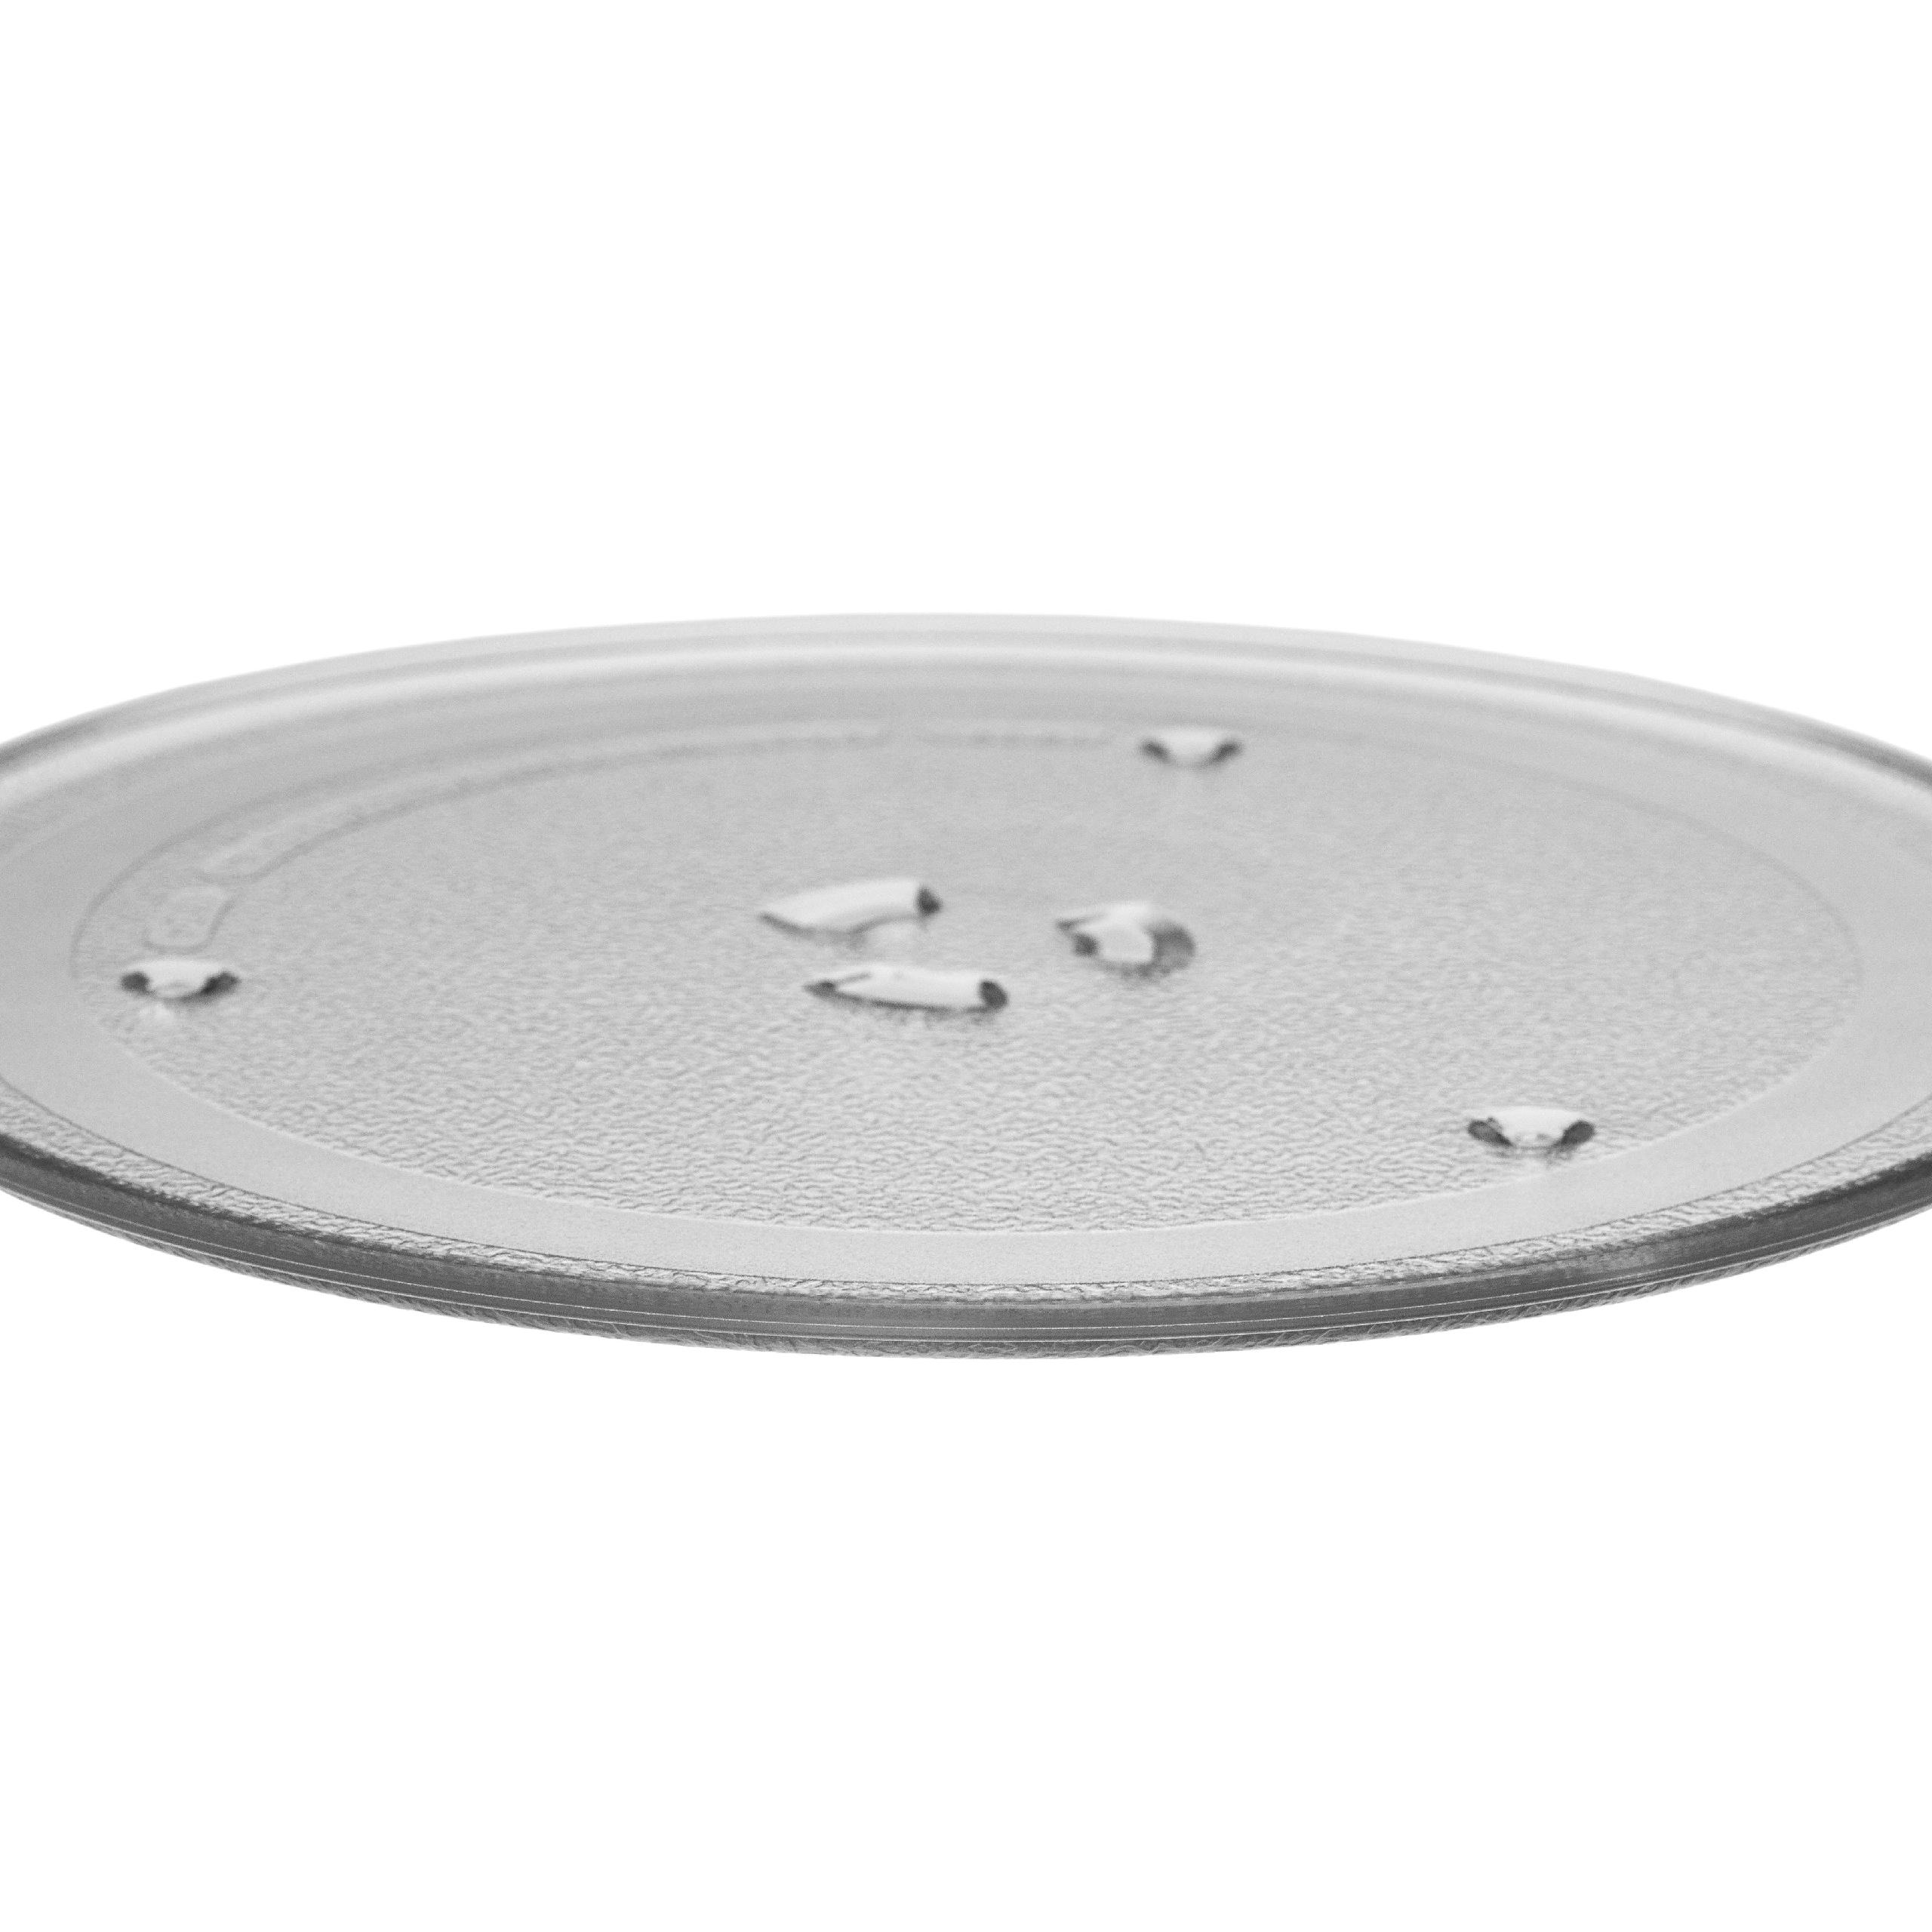 vidrio plato para microondas, plato giratorio de 28,8 cm para microondas Samsung CE1777 etc.